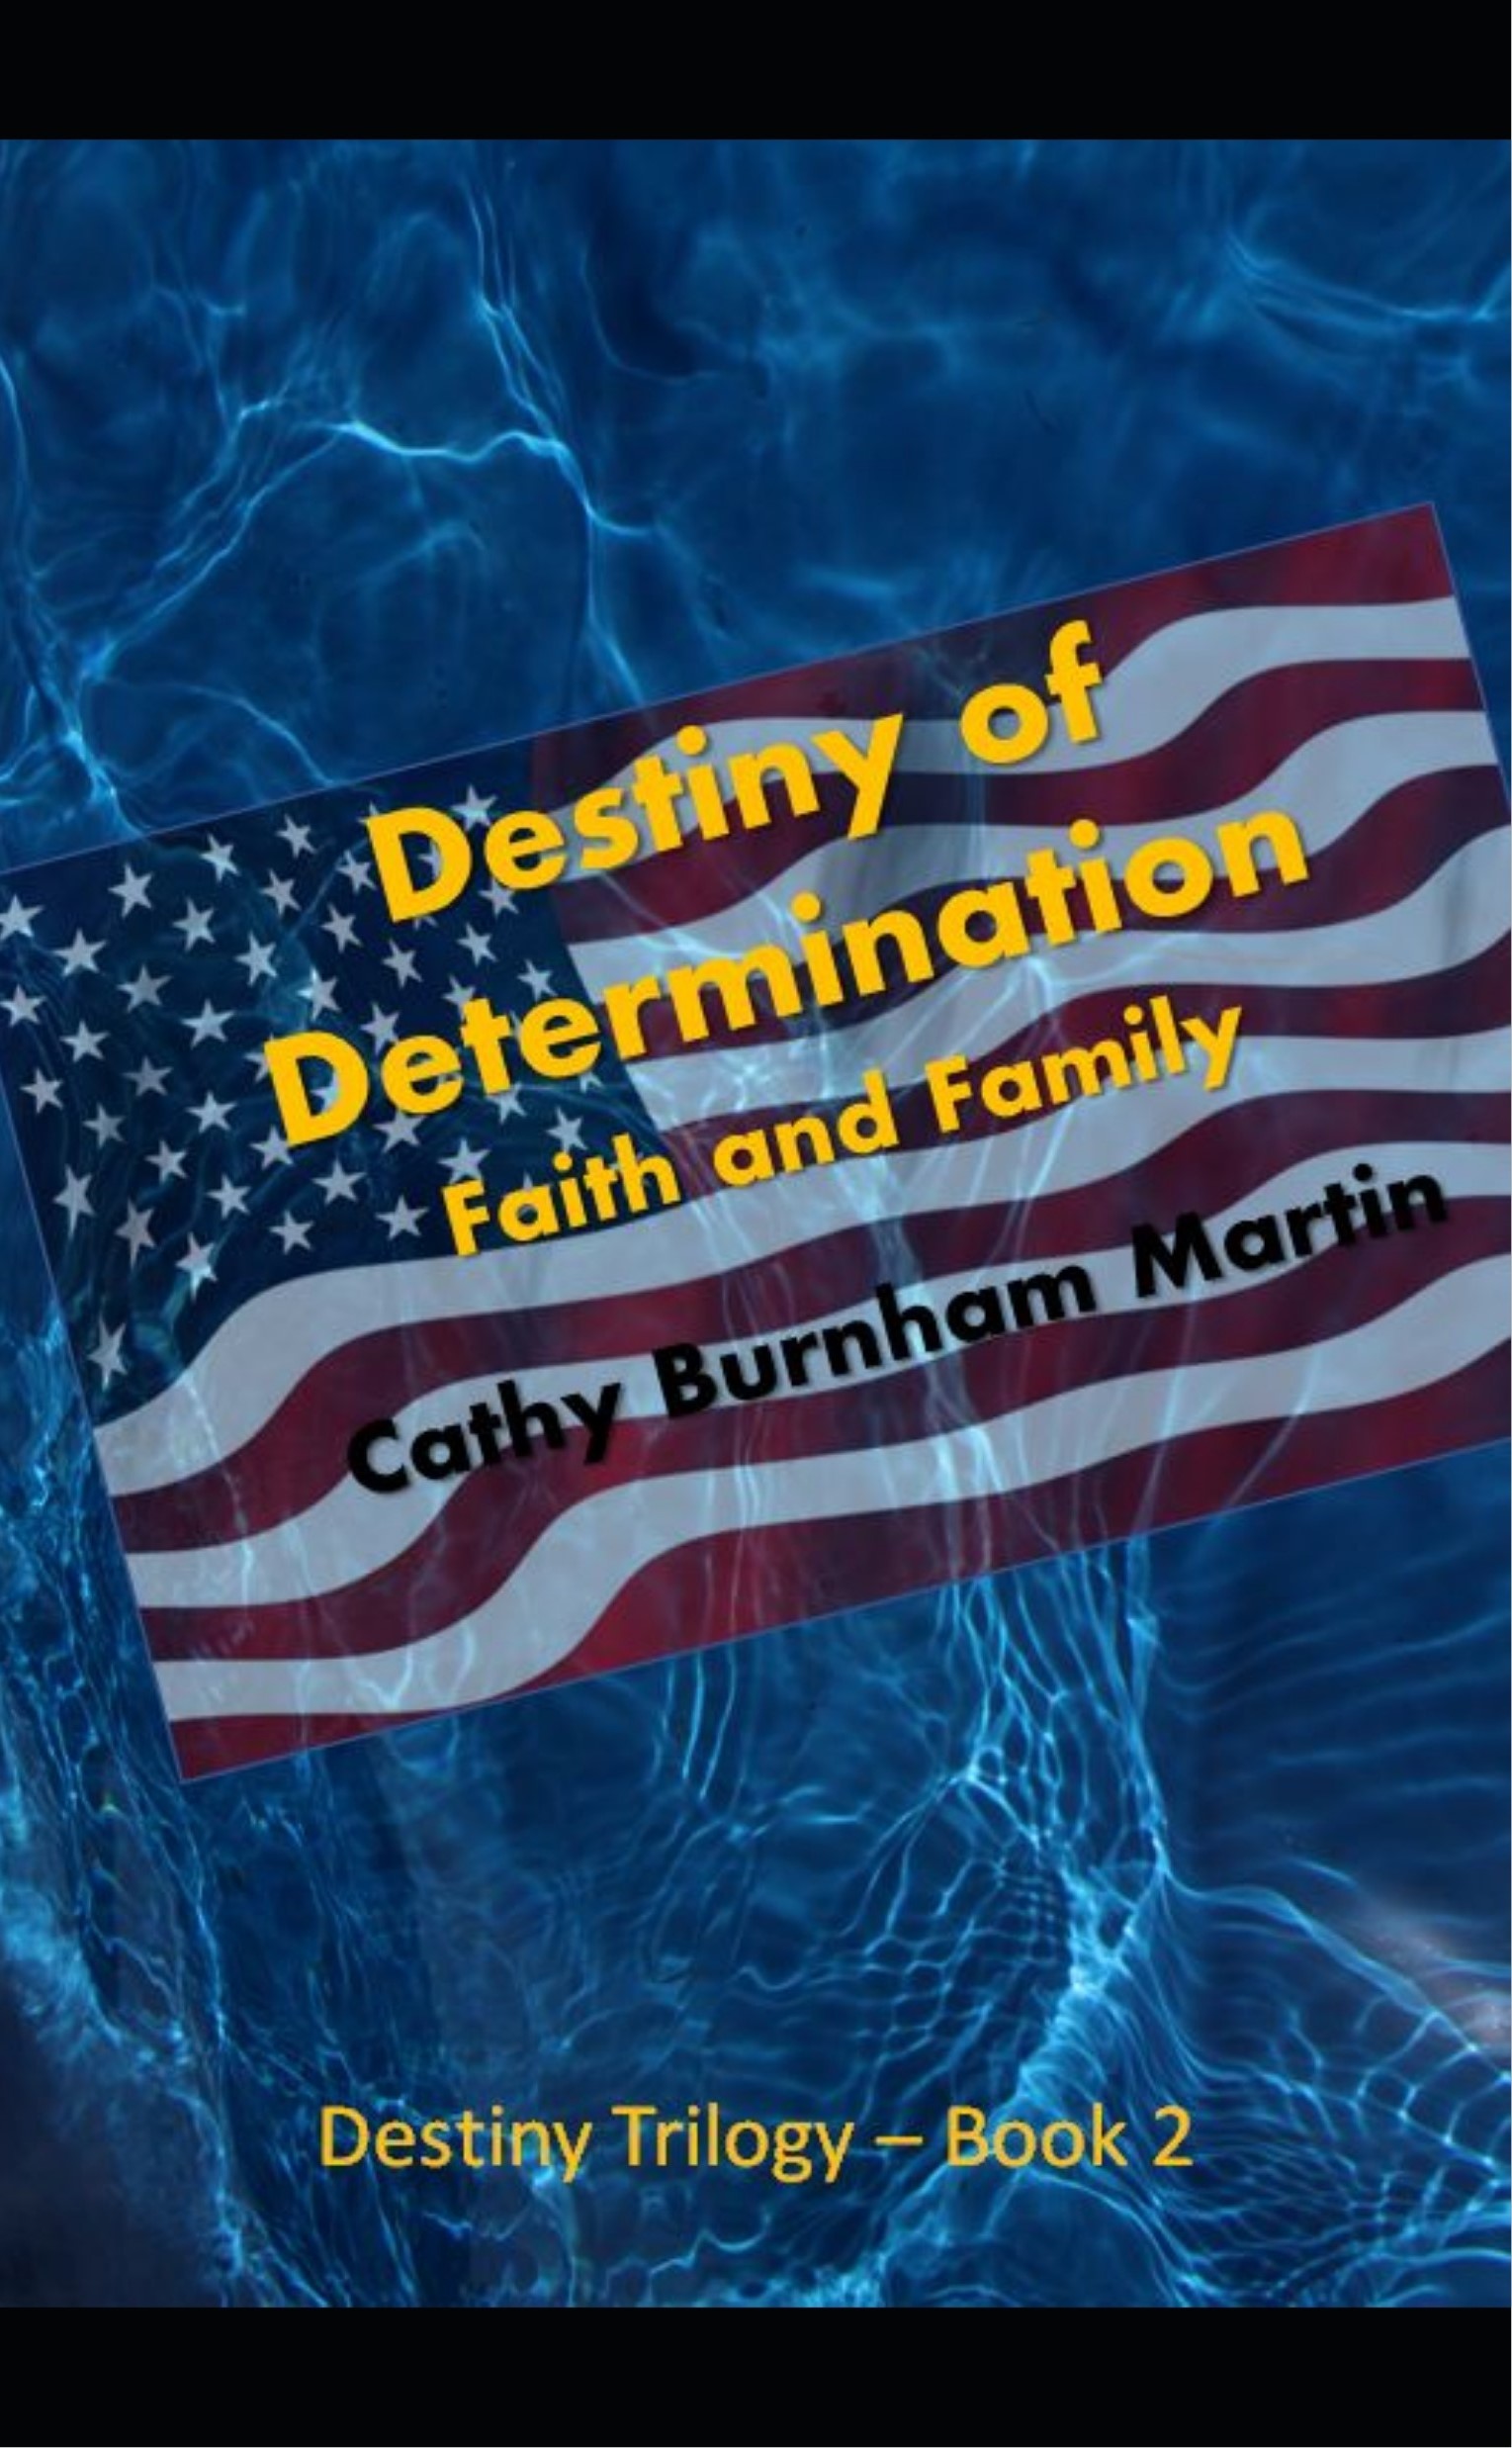 Destiny of Determination by Cathy Burnham Martin